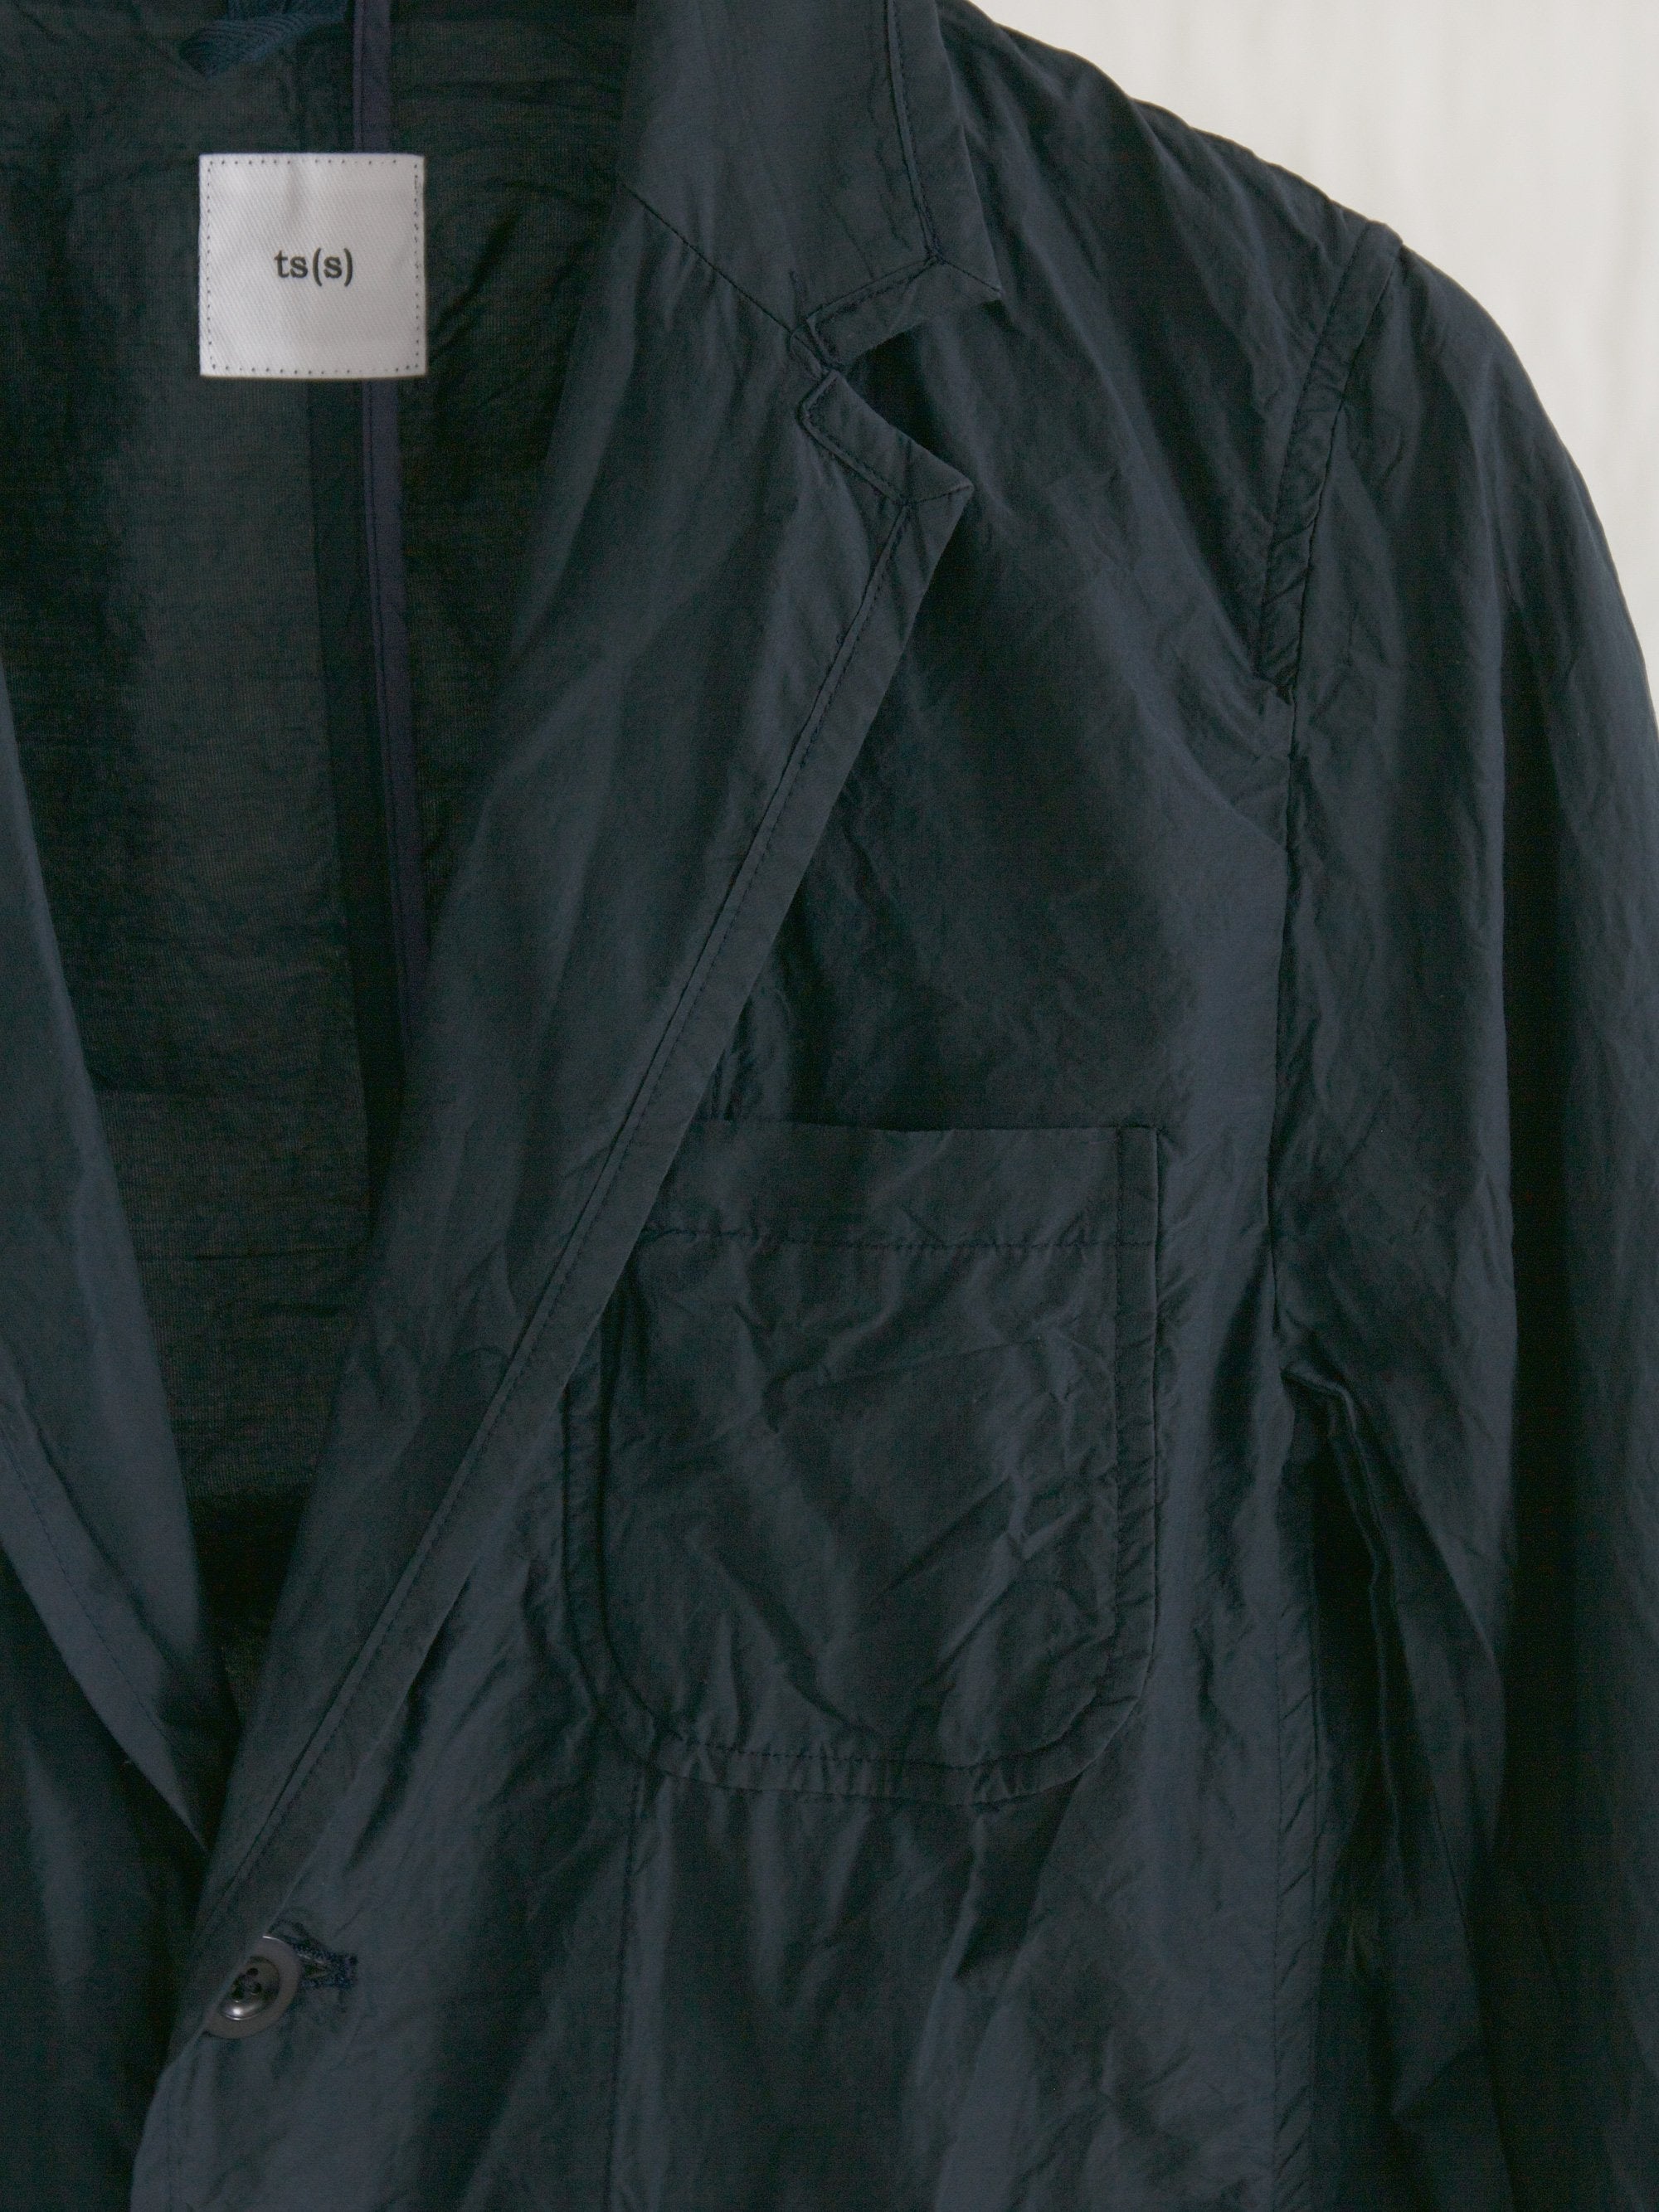 Namu Shop - ts(s) Cotton Silk Piping Jacket